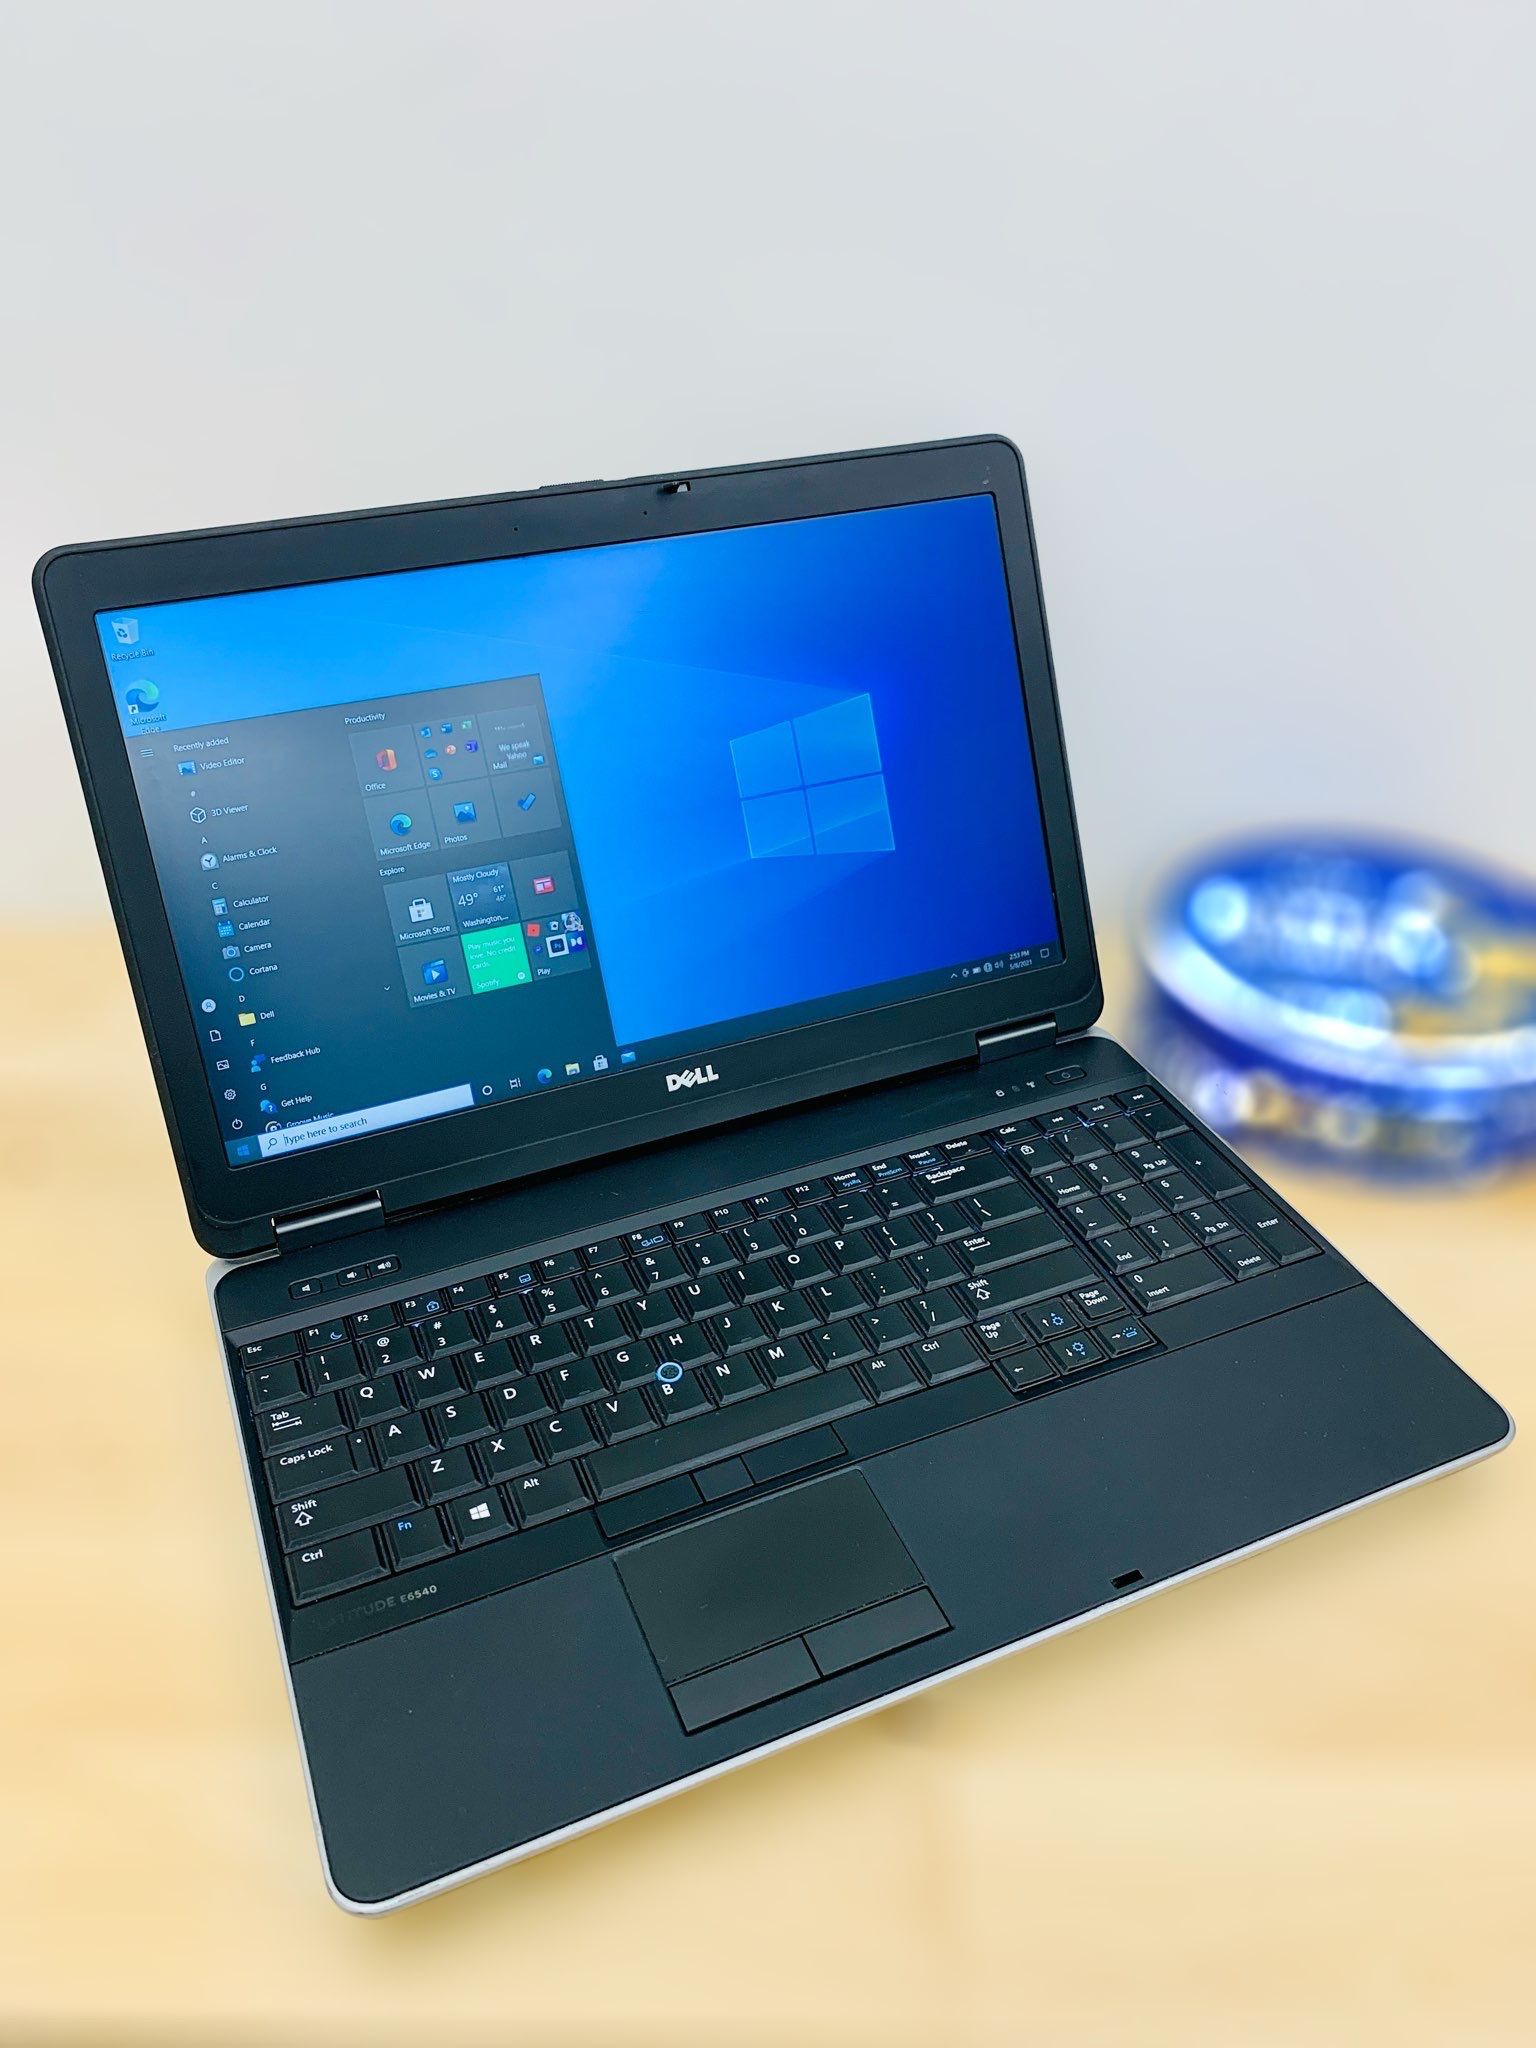 Dell i7 15.6” Full HD laptop / Windows 10 Pro / HDD 500GB / RAM 8GB / CD/DVD / Antivirus / Charger / Backlit keyboard